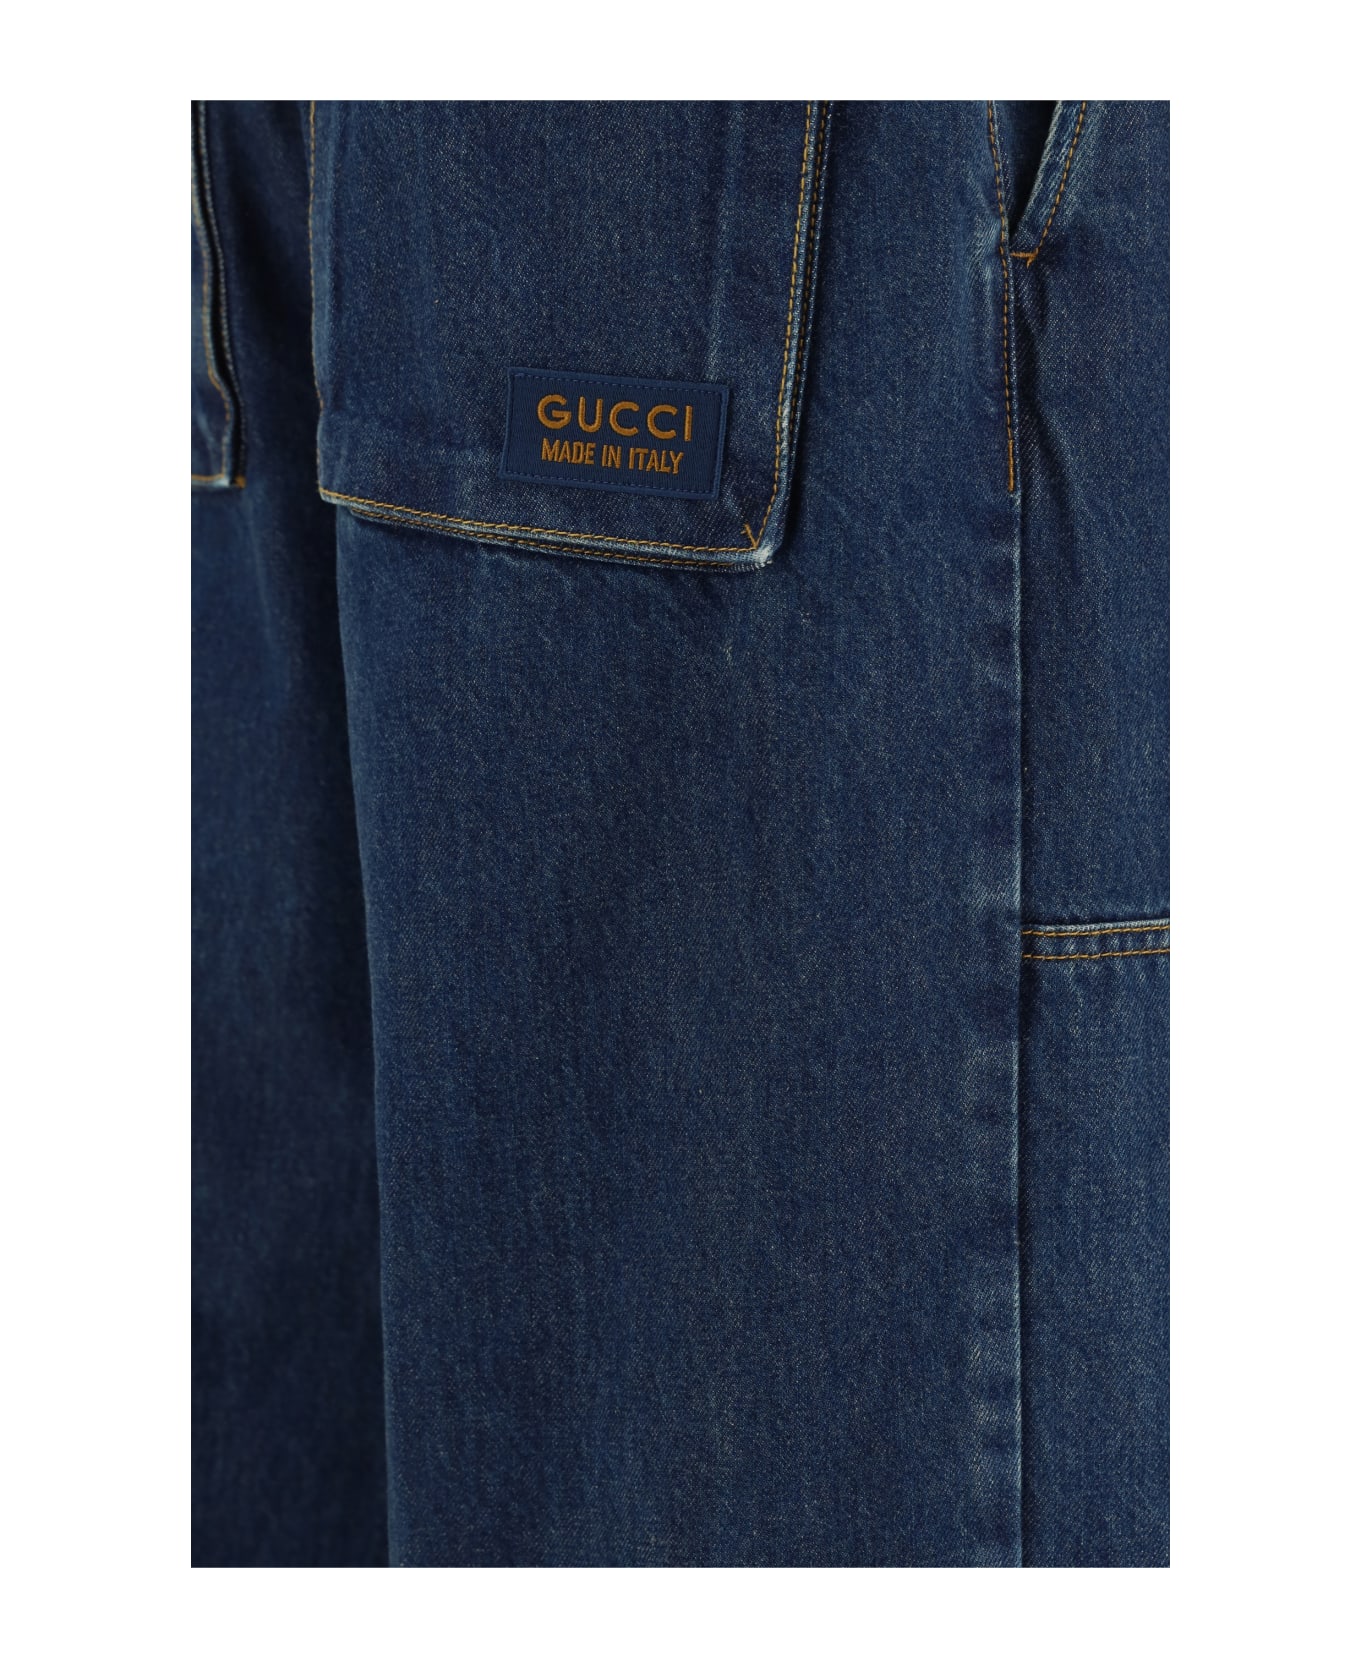 Gucci Jeans - Blue/mix ショートパンツ